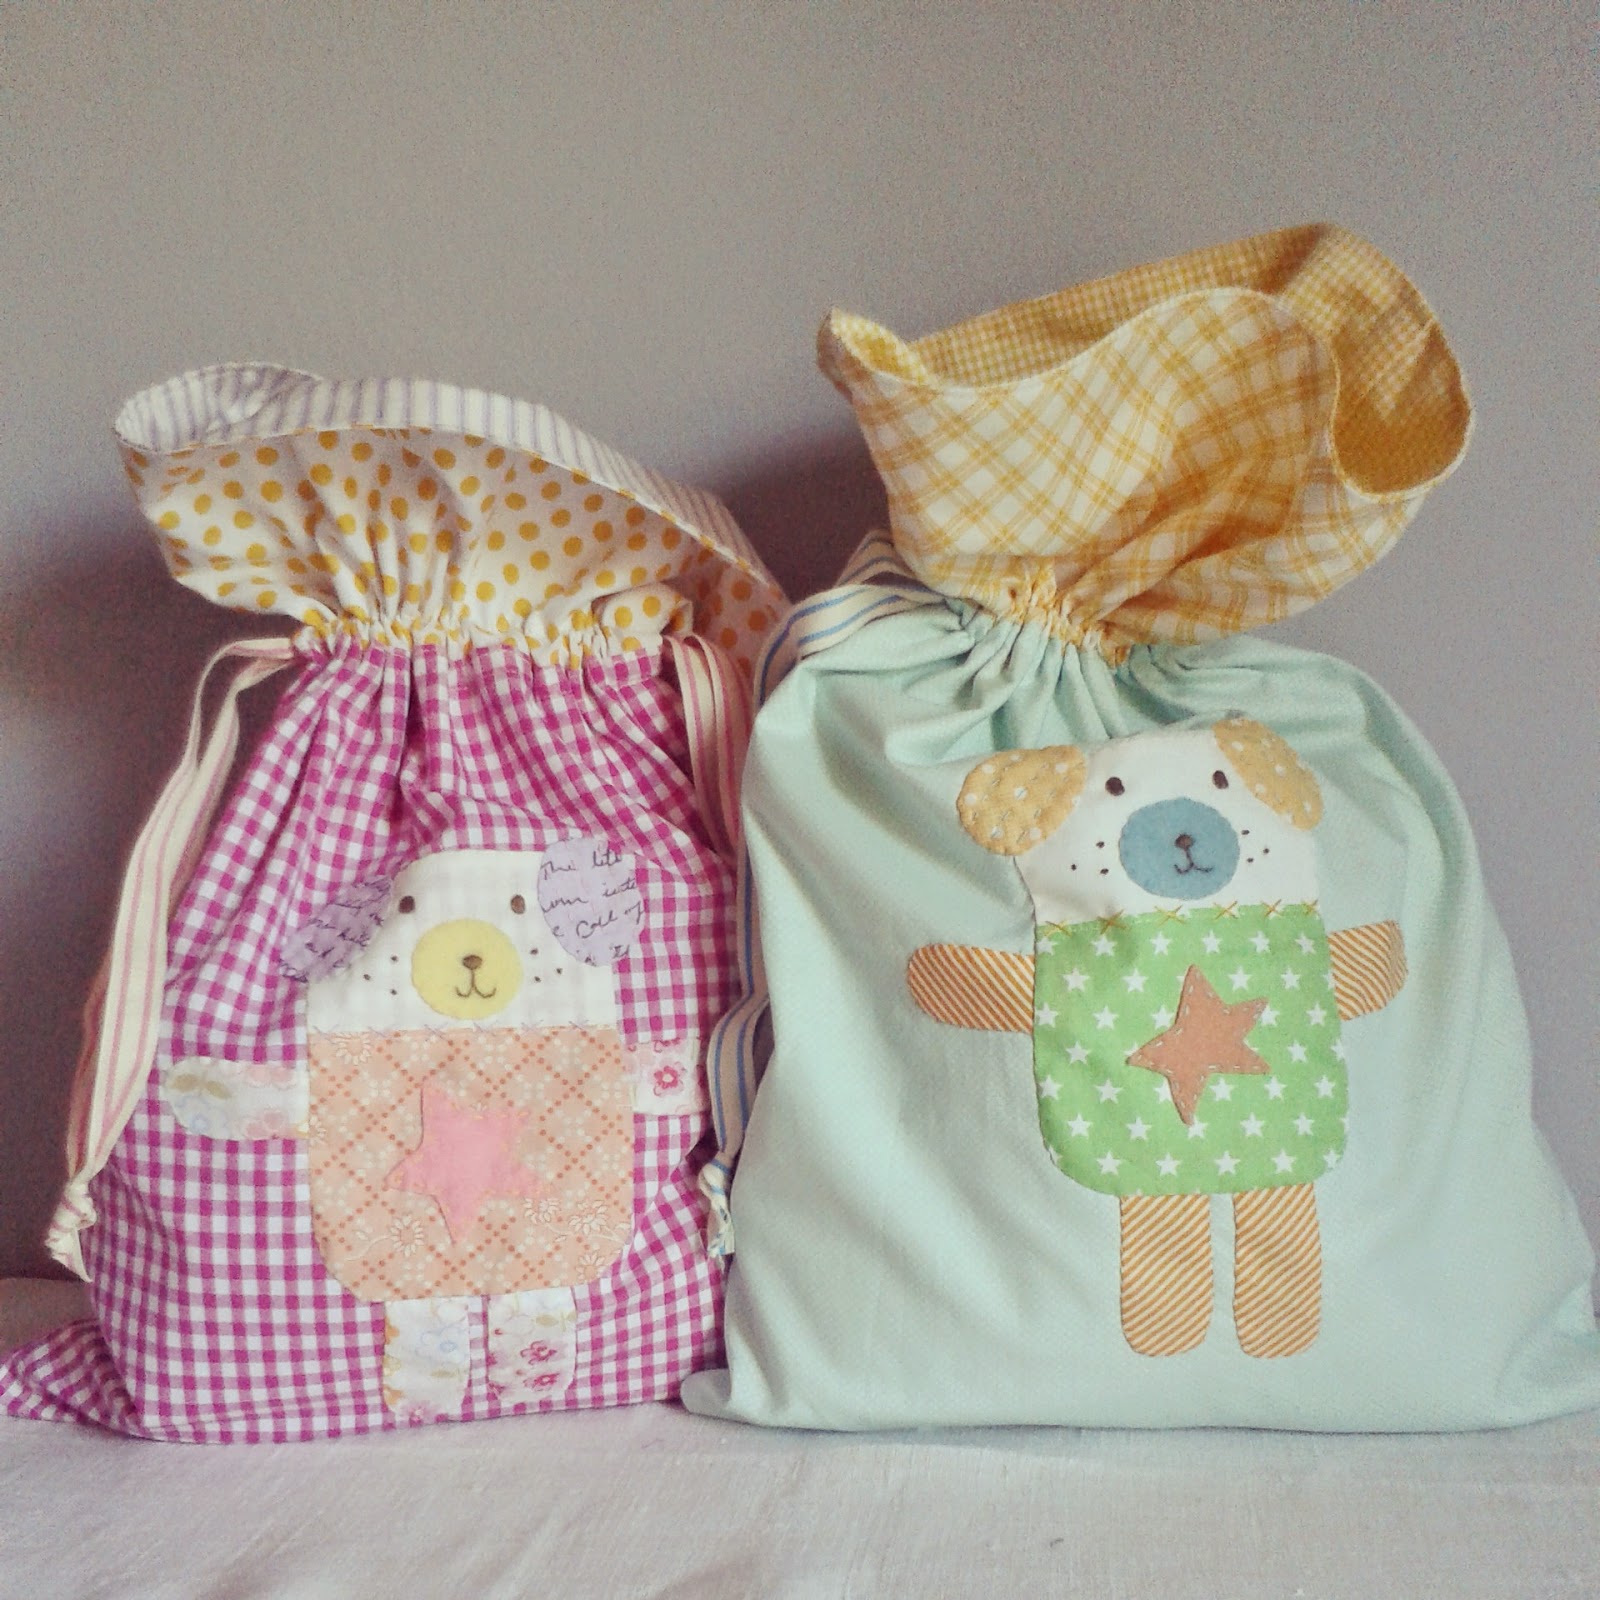 Roxy Creations: Super cute drawstring bags